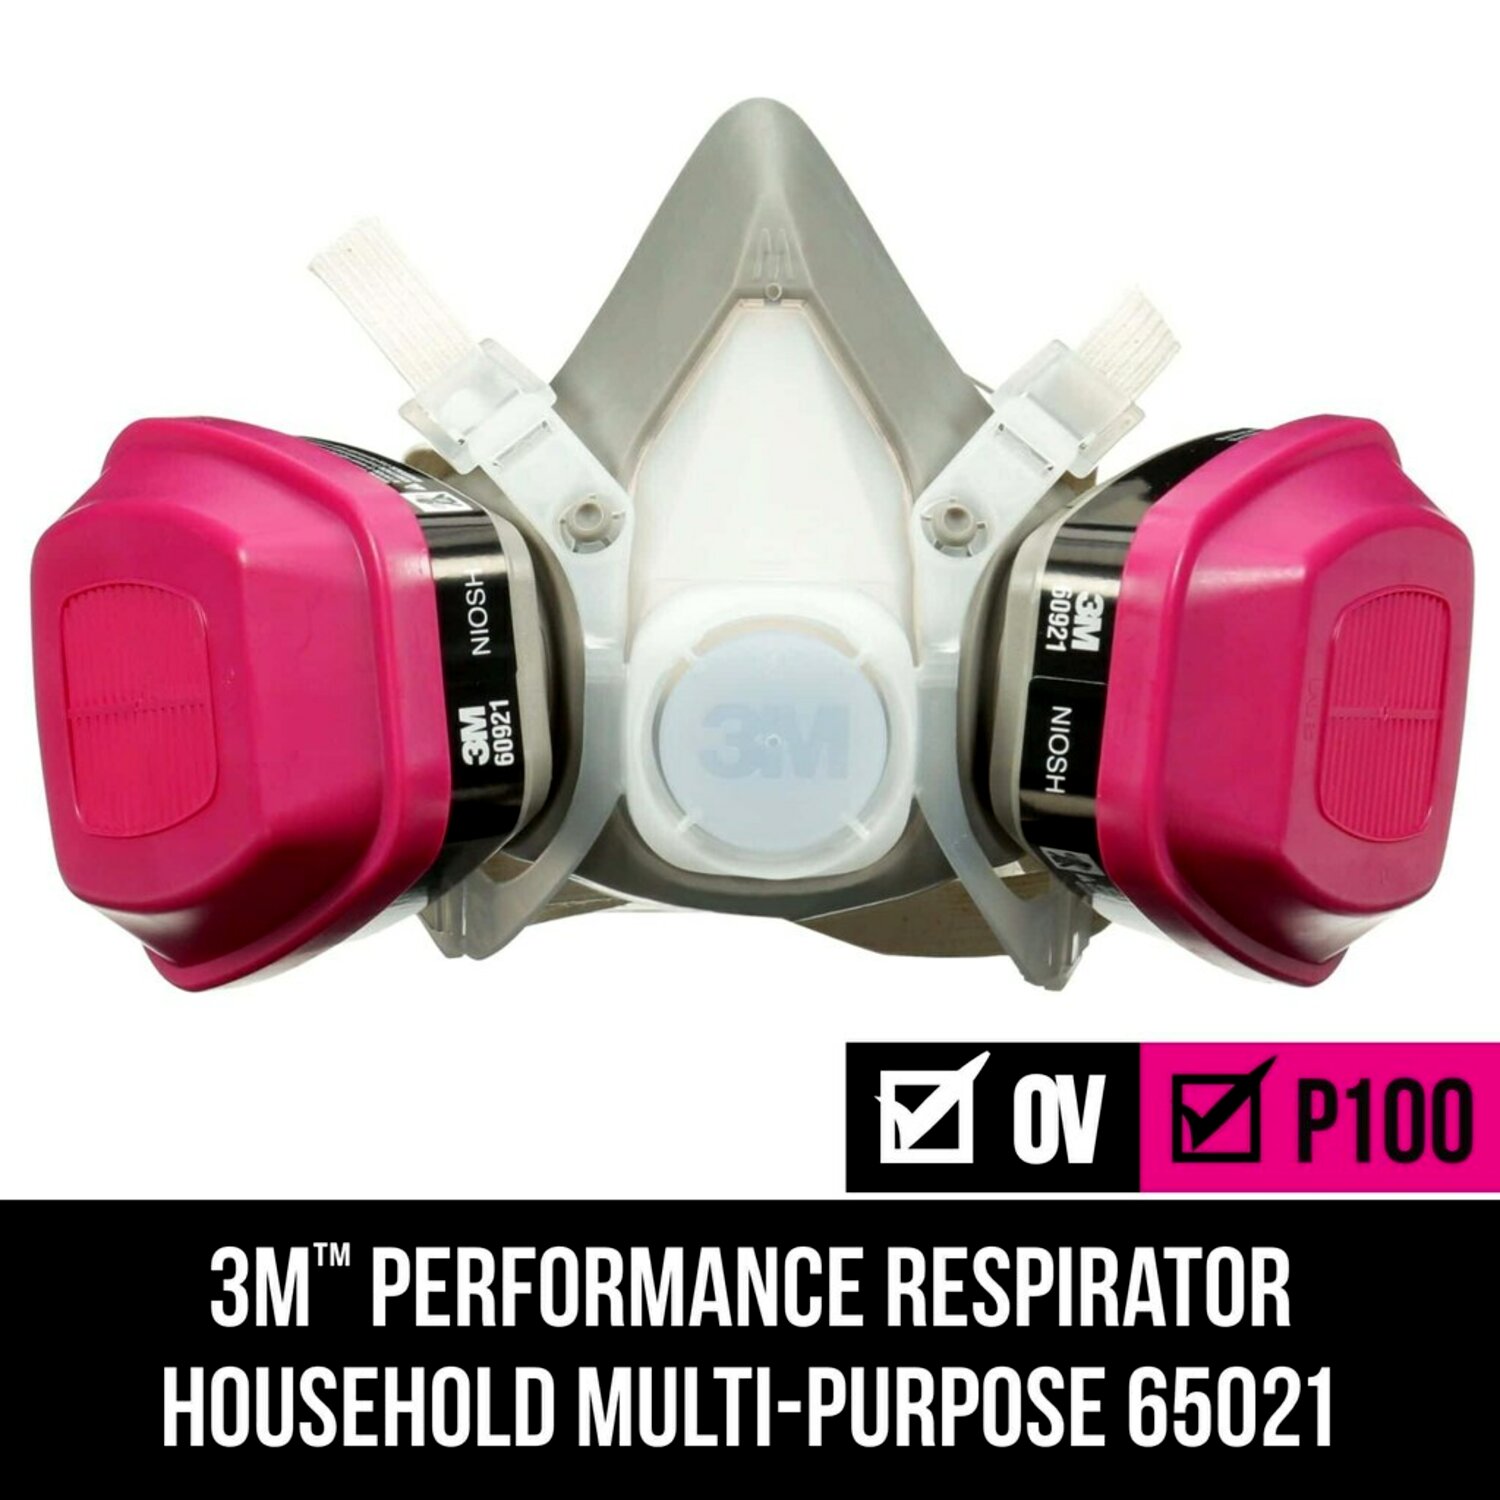 7100155156 - 3M Household Multi-purpose Respirator, 65021H1-DC, 1 each/pack, 4 packs/case